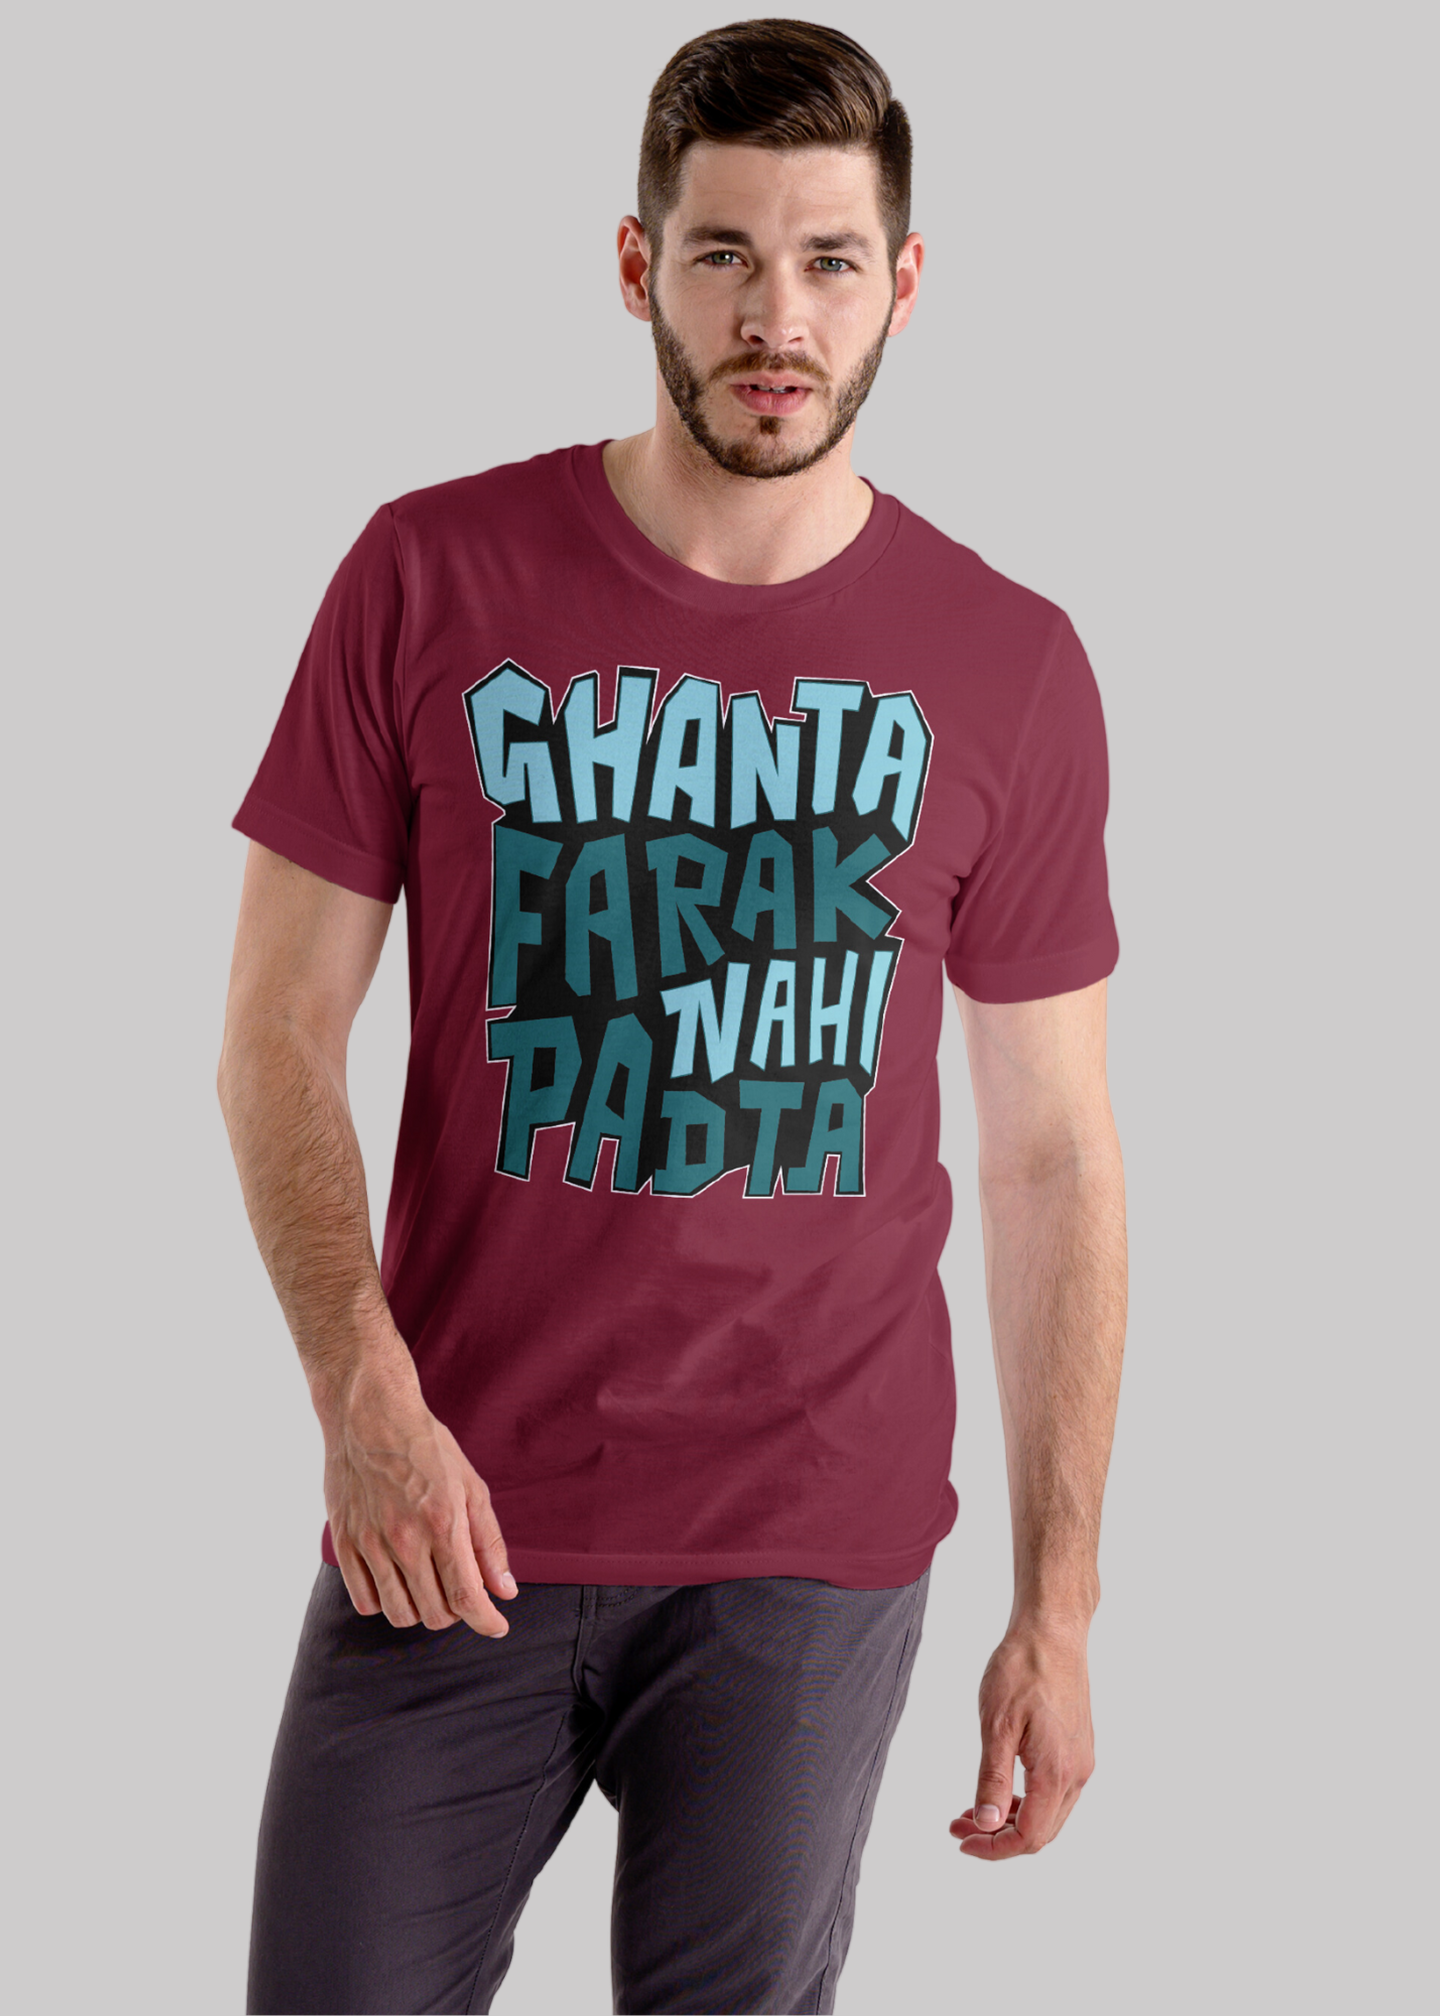 Ghanta farak nahi padta Printed Half Sleeve Premium Cotton T-shirt For Men